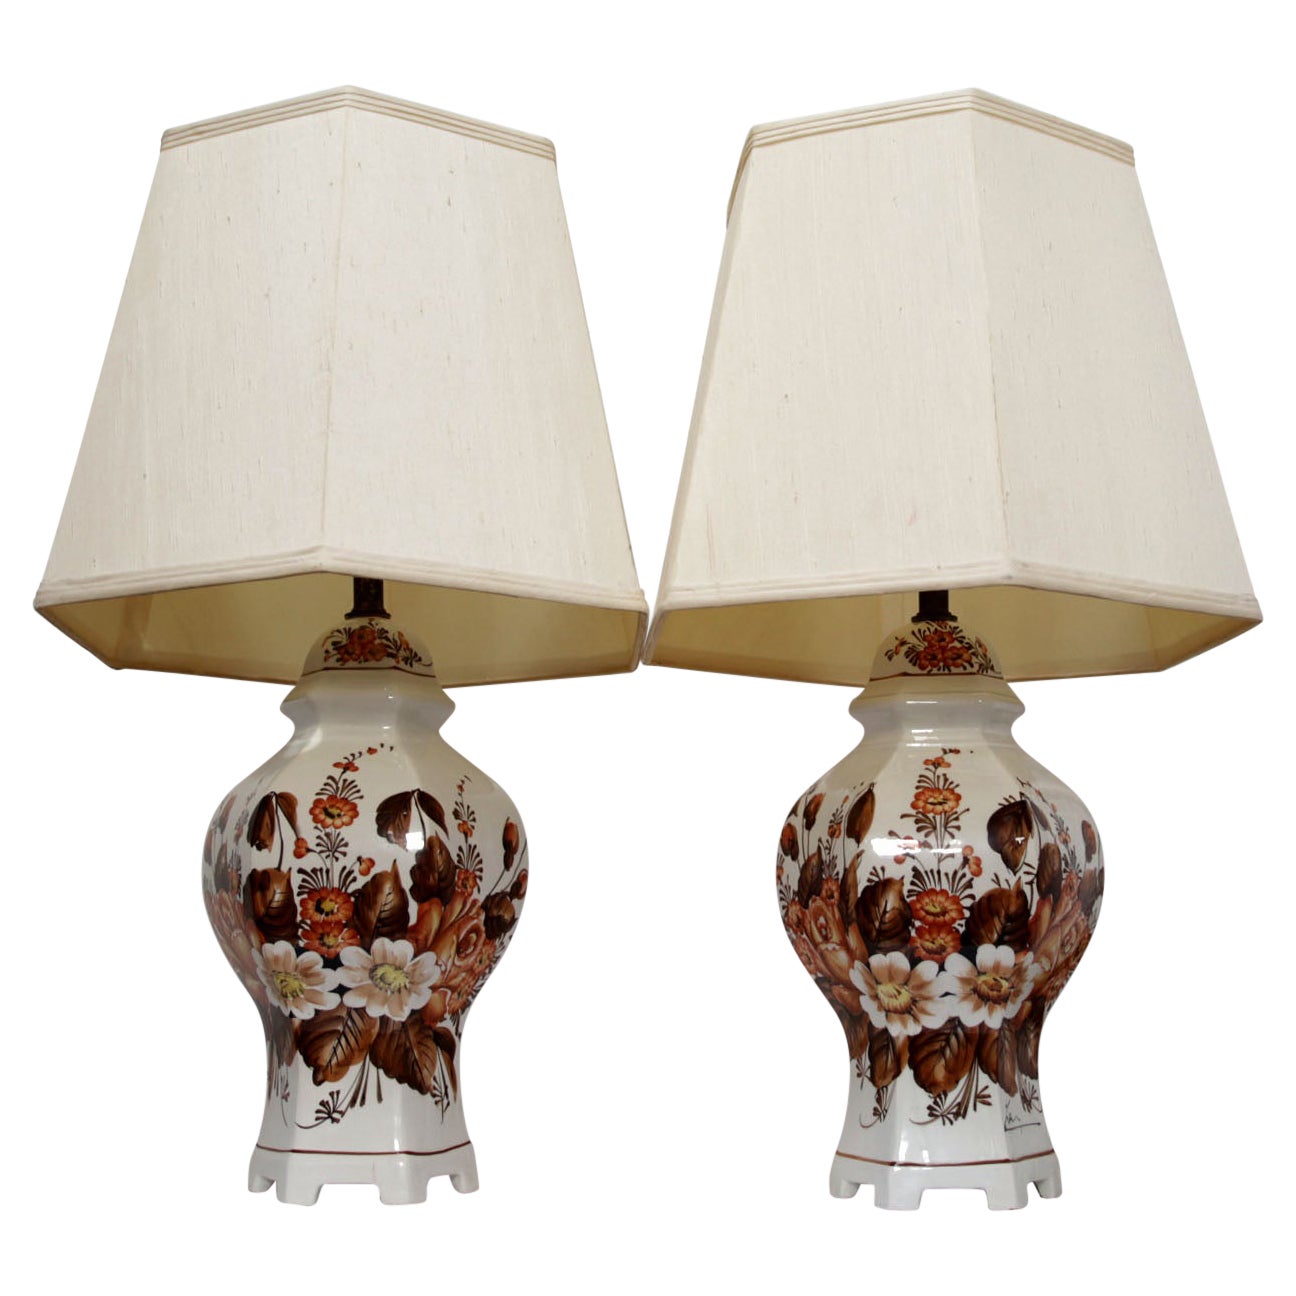 Pair of Signed Antonio Zen Hexagonal Lamps, Made in Italy For Sale